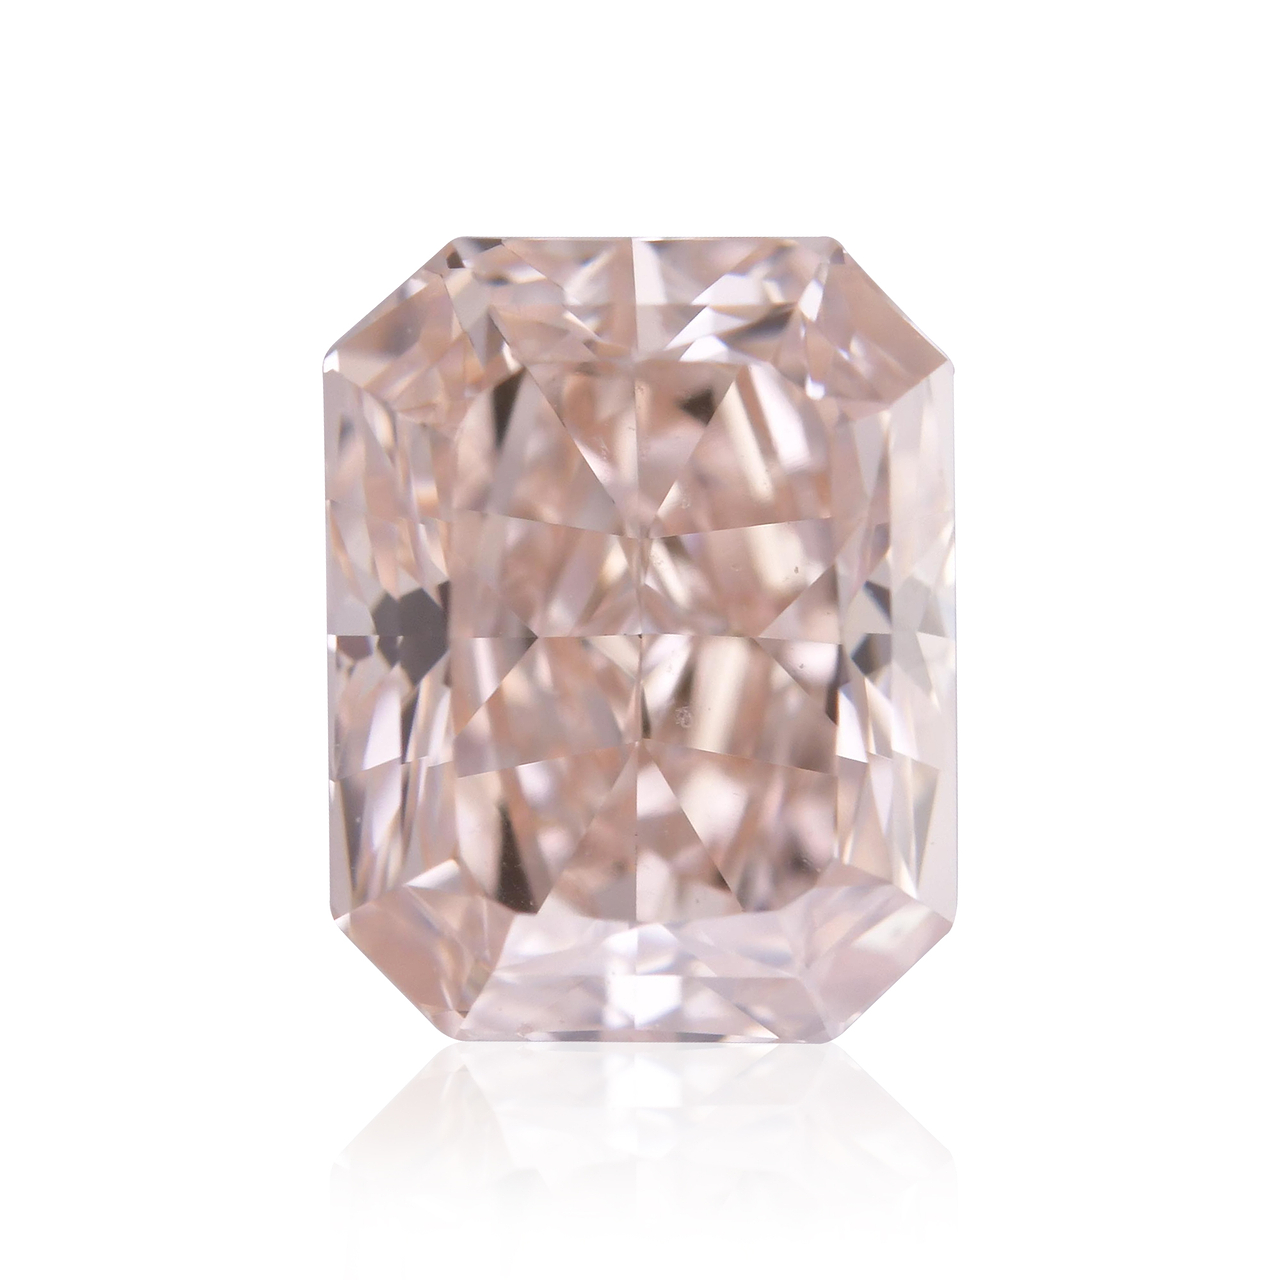 Leibish Fancy Brown Radiant Diamond 1.01 ct VS1 GIA